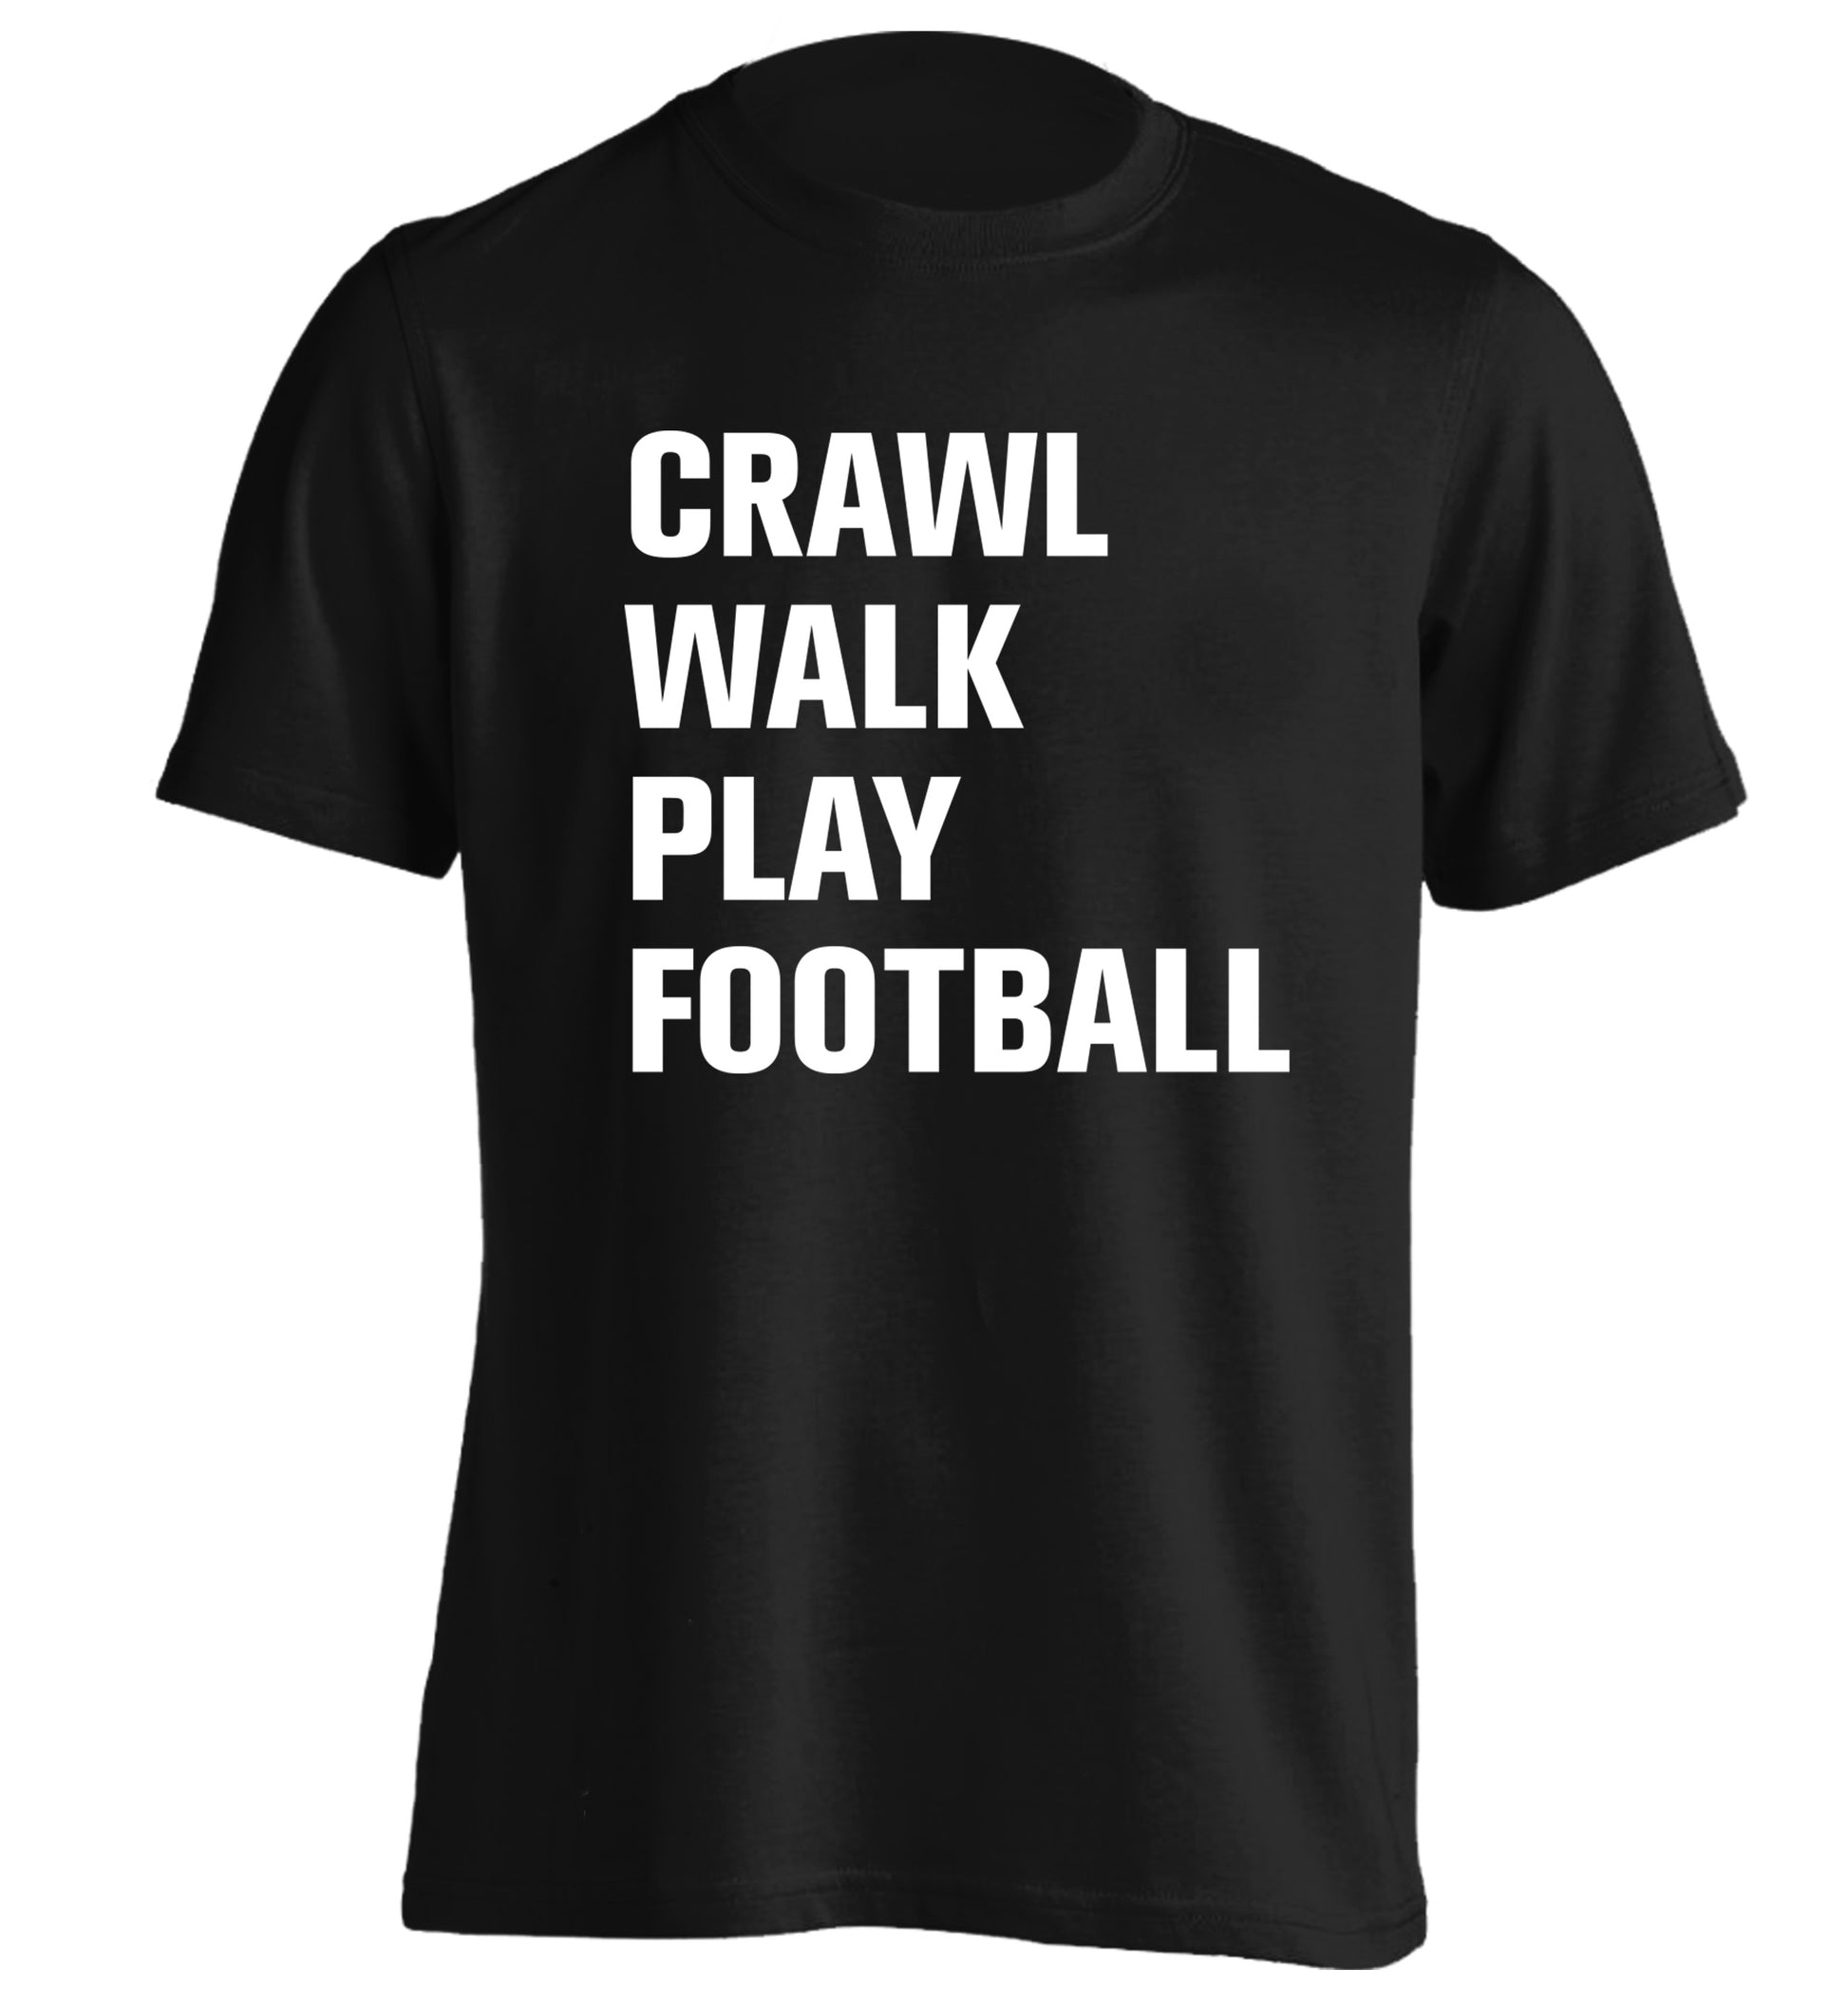 Crawl, walk, play football adults unisex black Tshirt 2XL